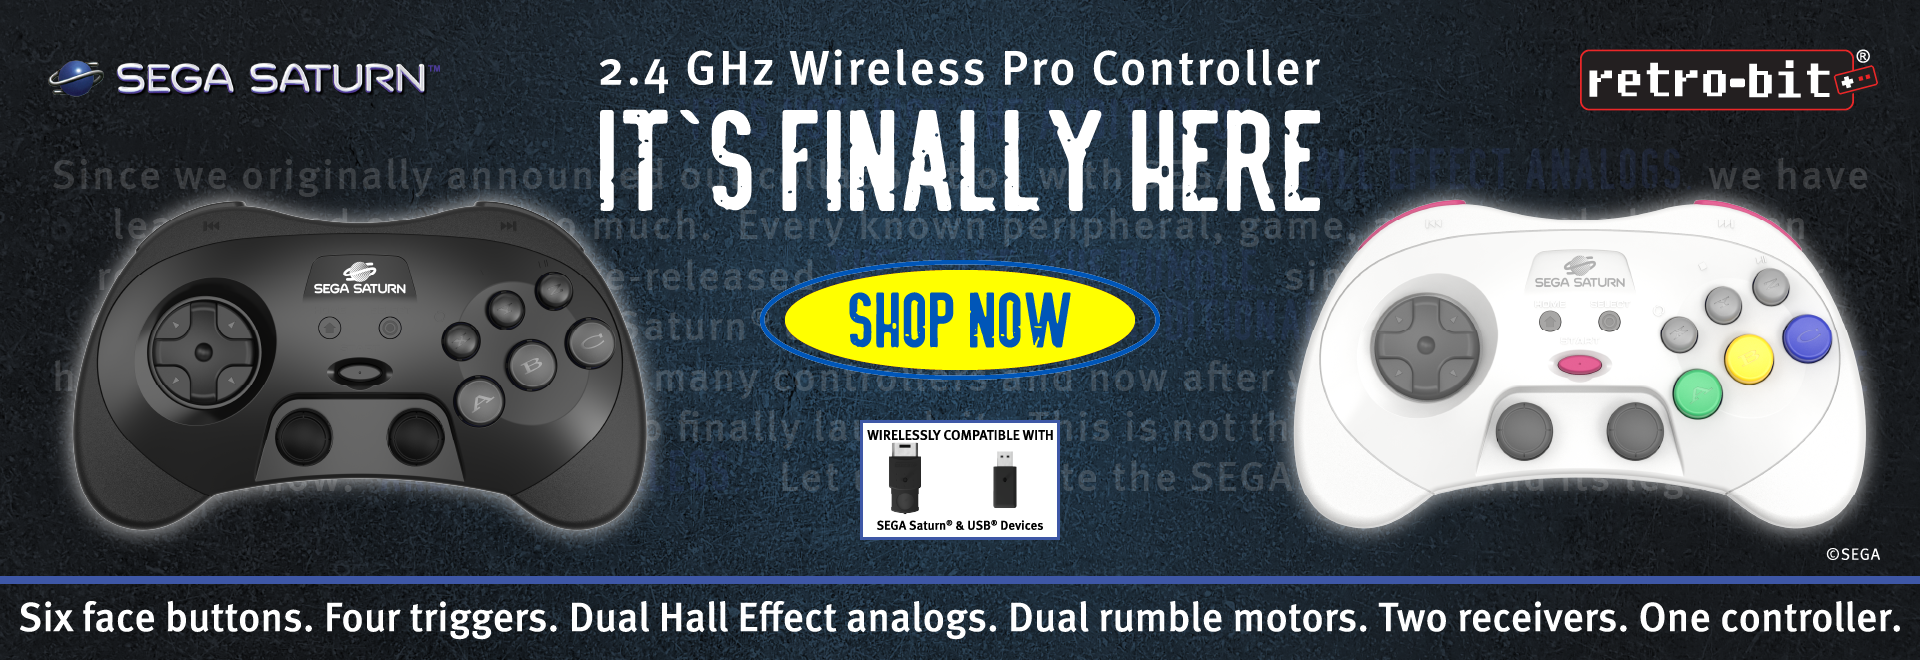 It's finally here!  SEGA Saturn 2.4 GHz Wireless Pro Controller!